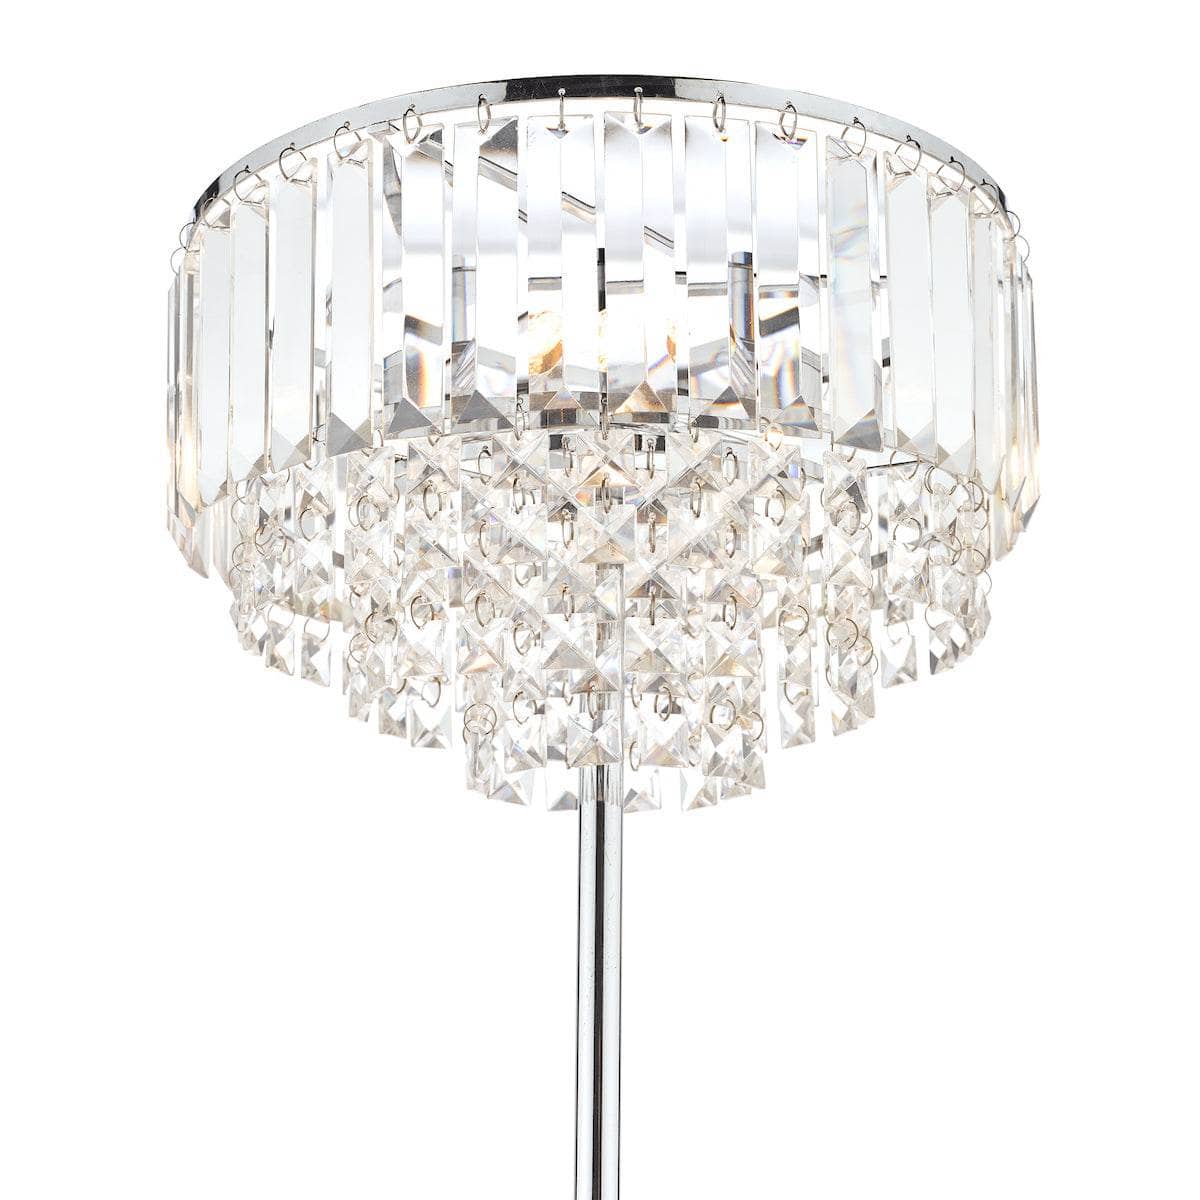 Lights  -  Laura Ashley Vienna Crystal Glass 3 Light Floor Lamp  -  50155819